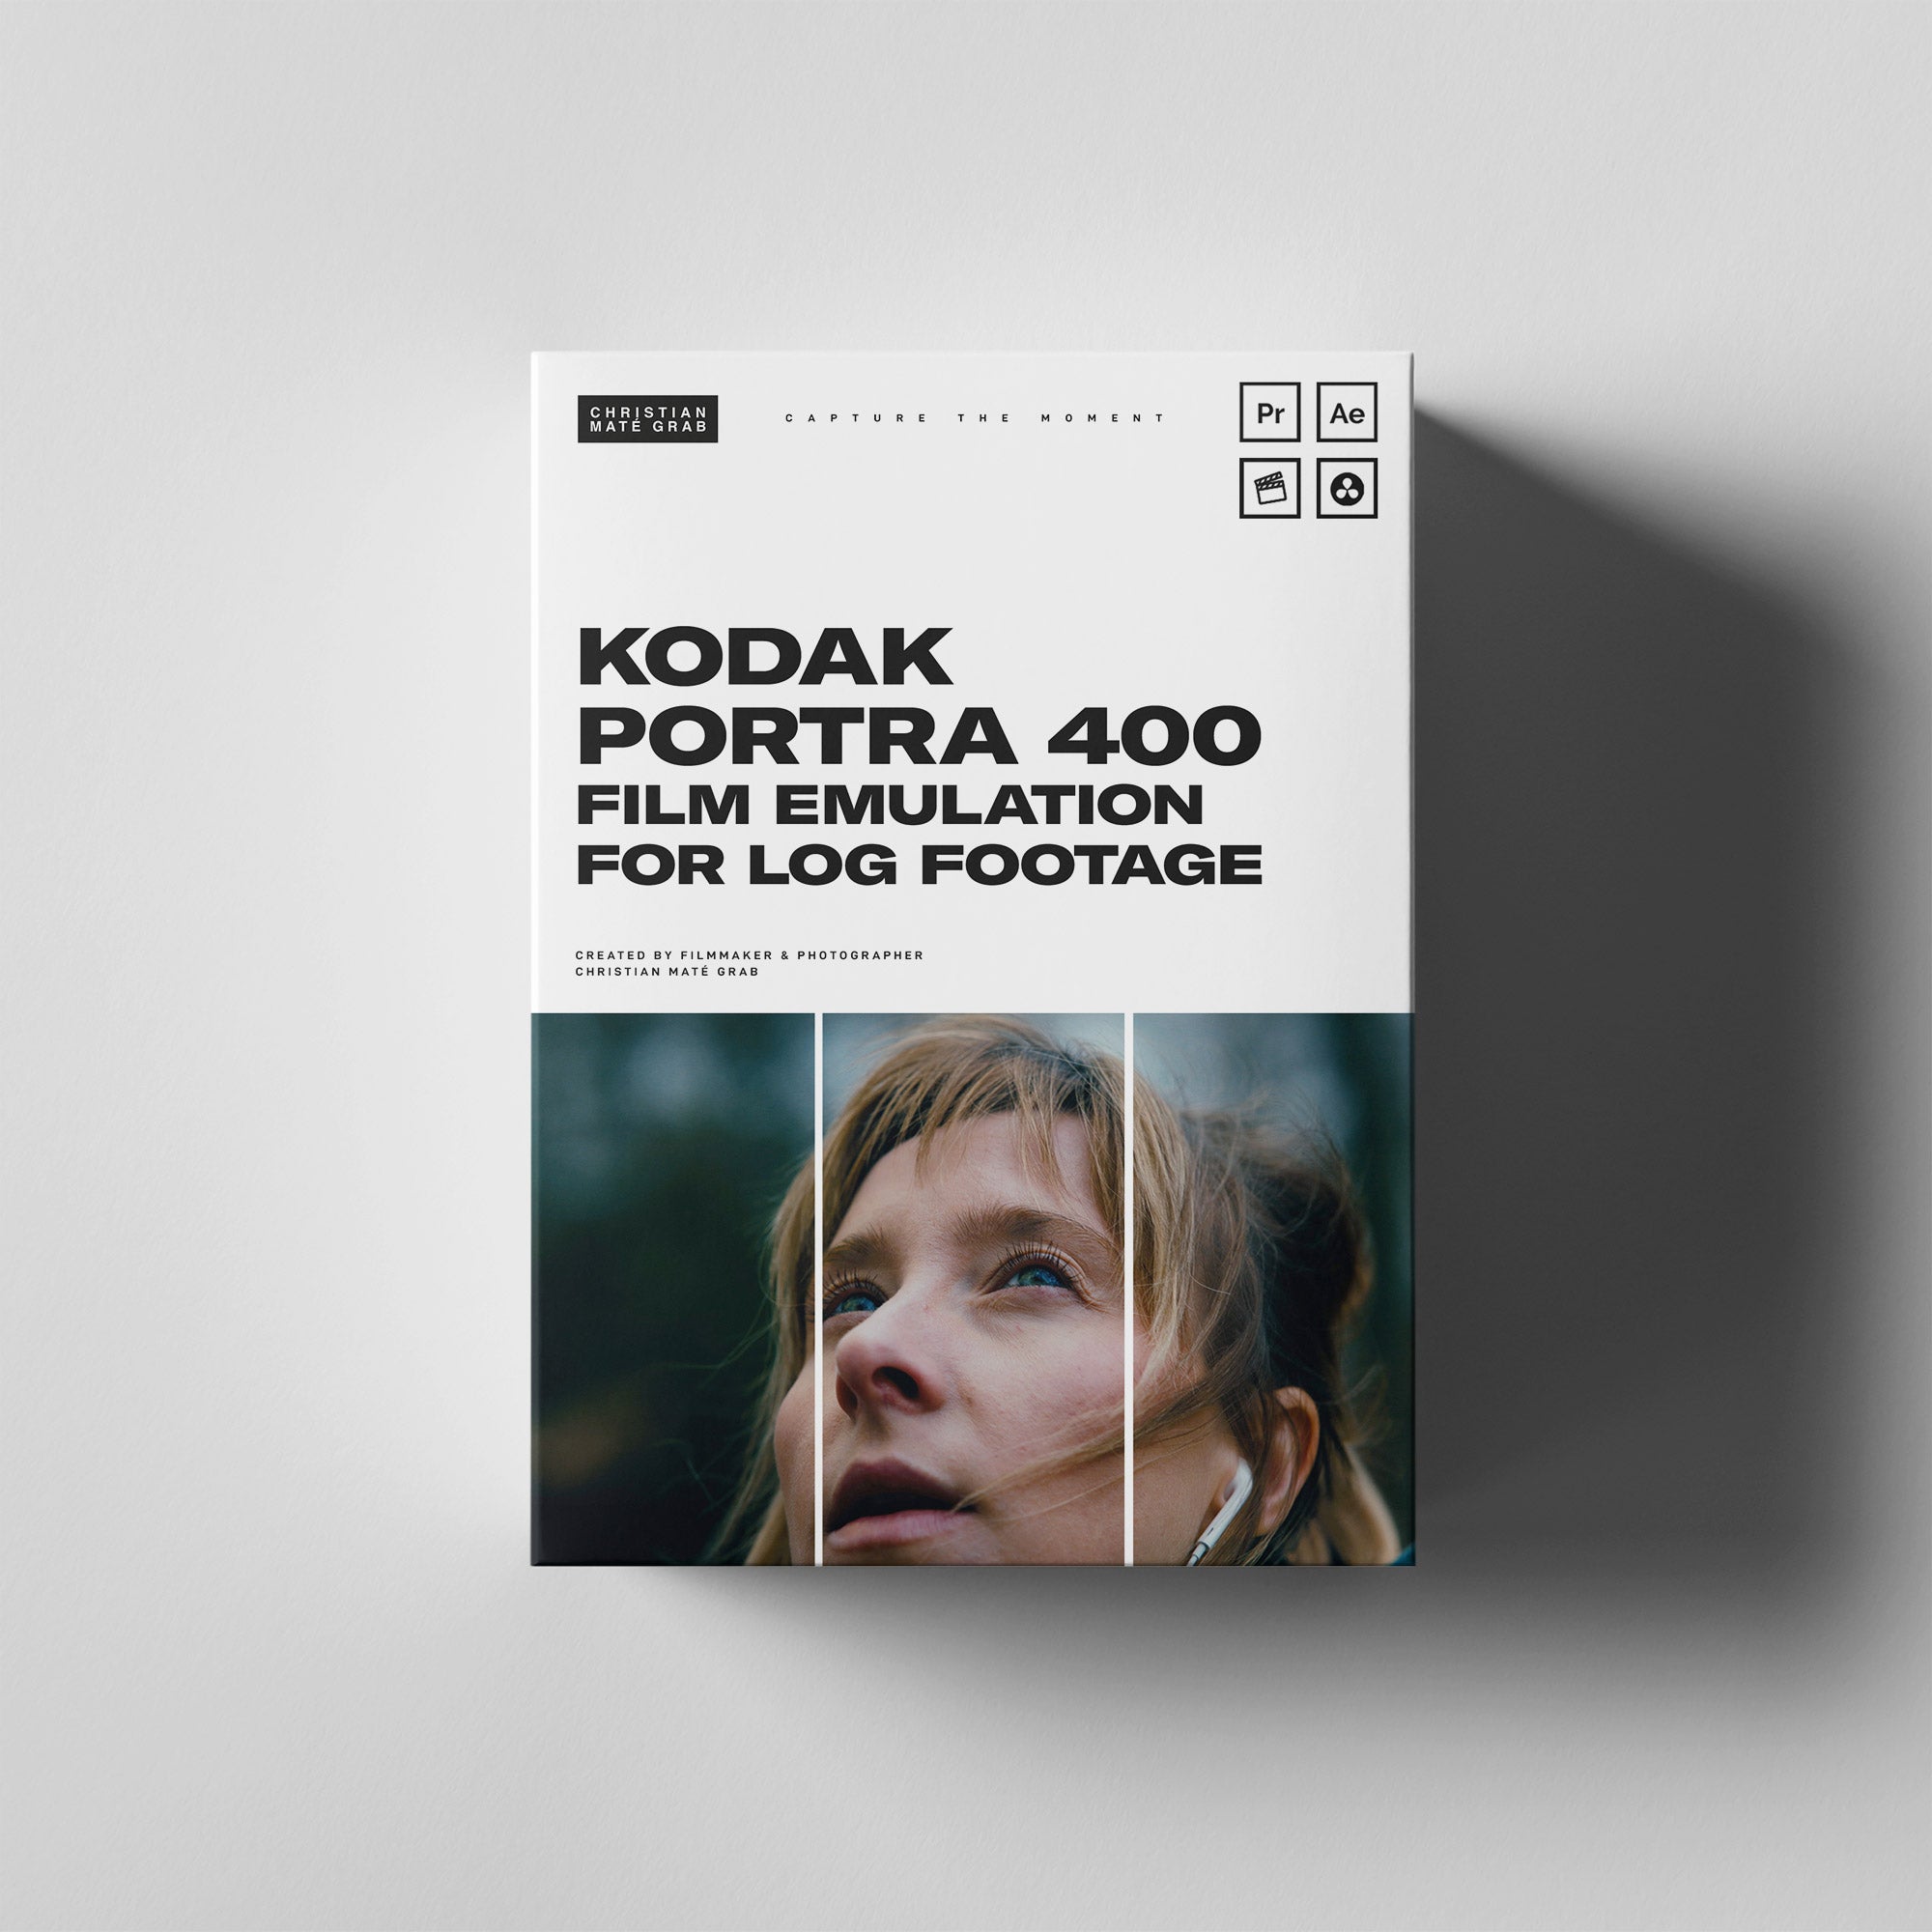 Kodak Portra Film Emulation (for LOG footage)